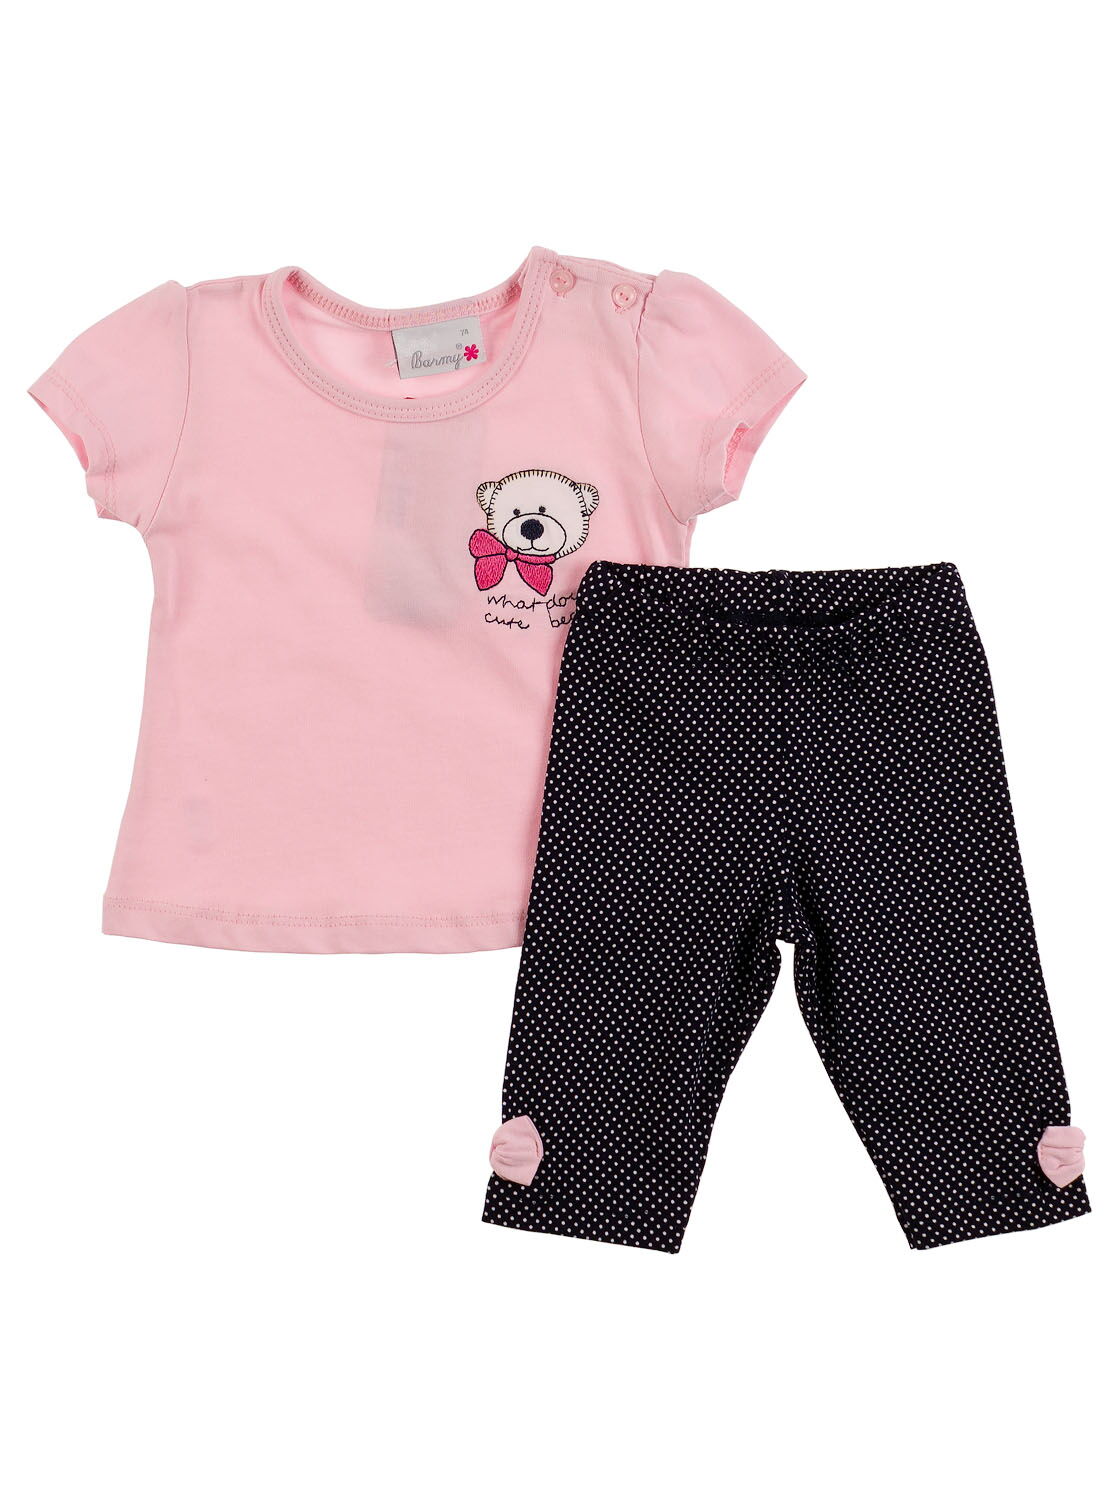 Комплект футболка и бриджи Barmy Мишка розовый 0041 - цена